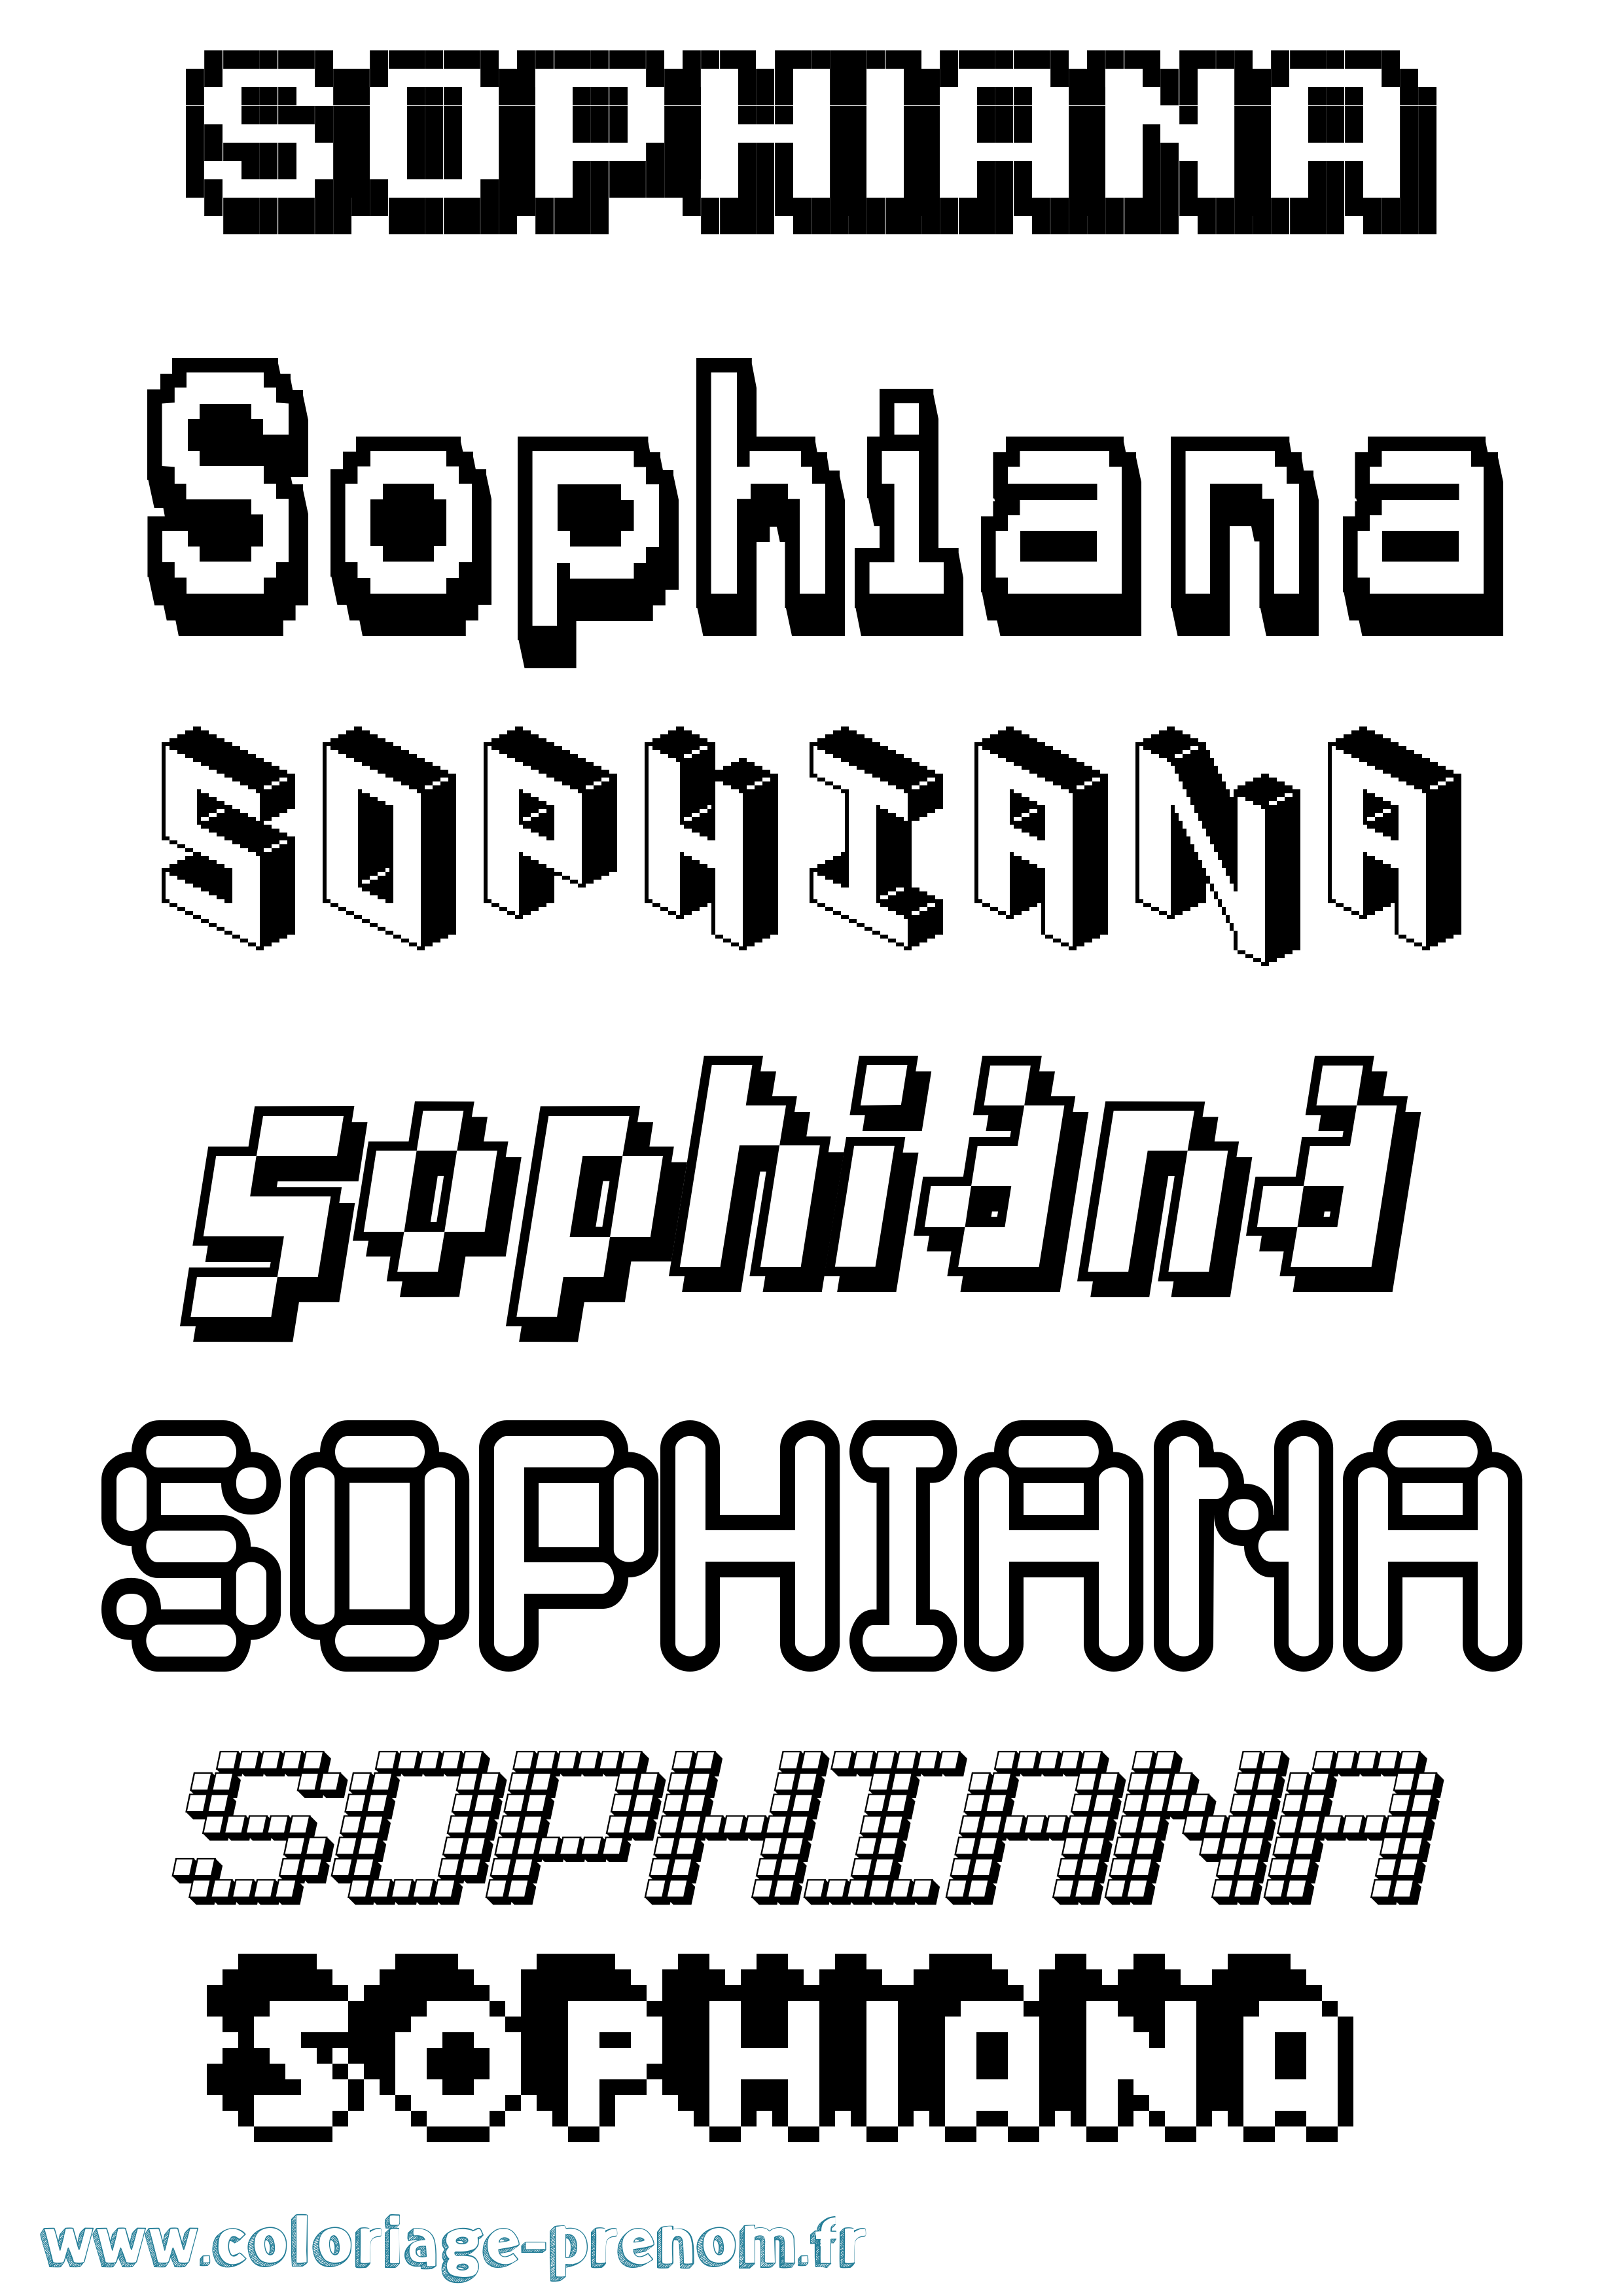 Coloriage prénom Sophiana Pixel